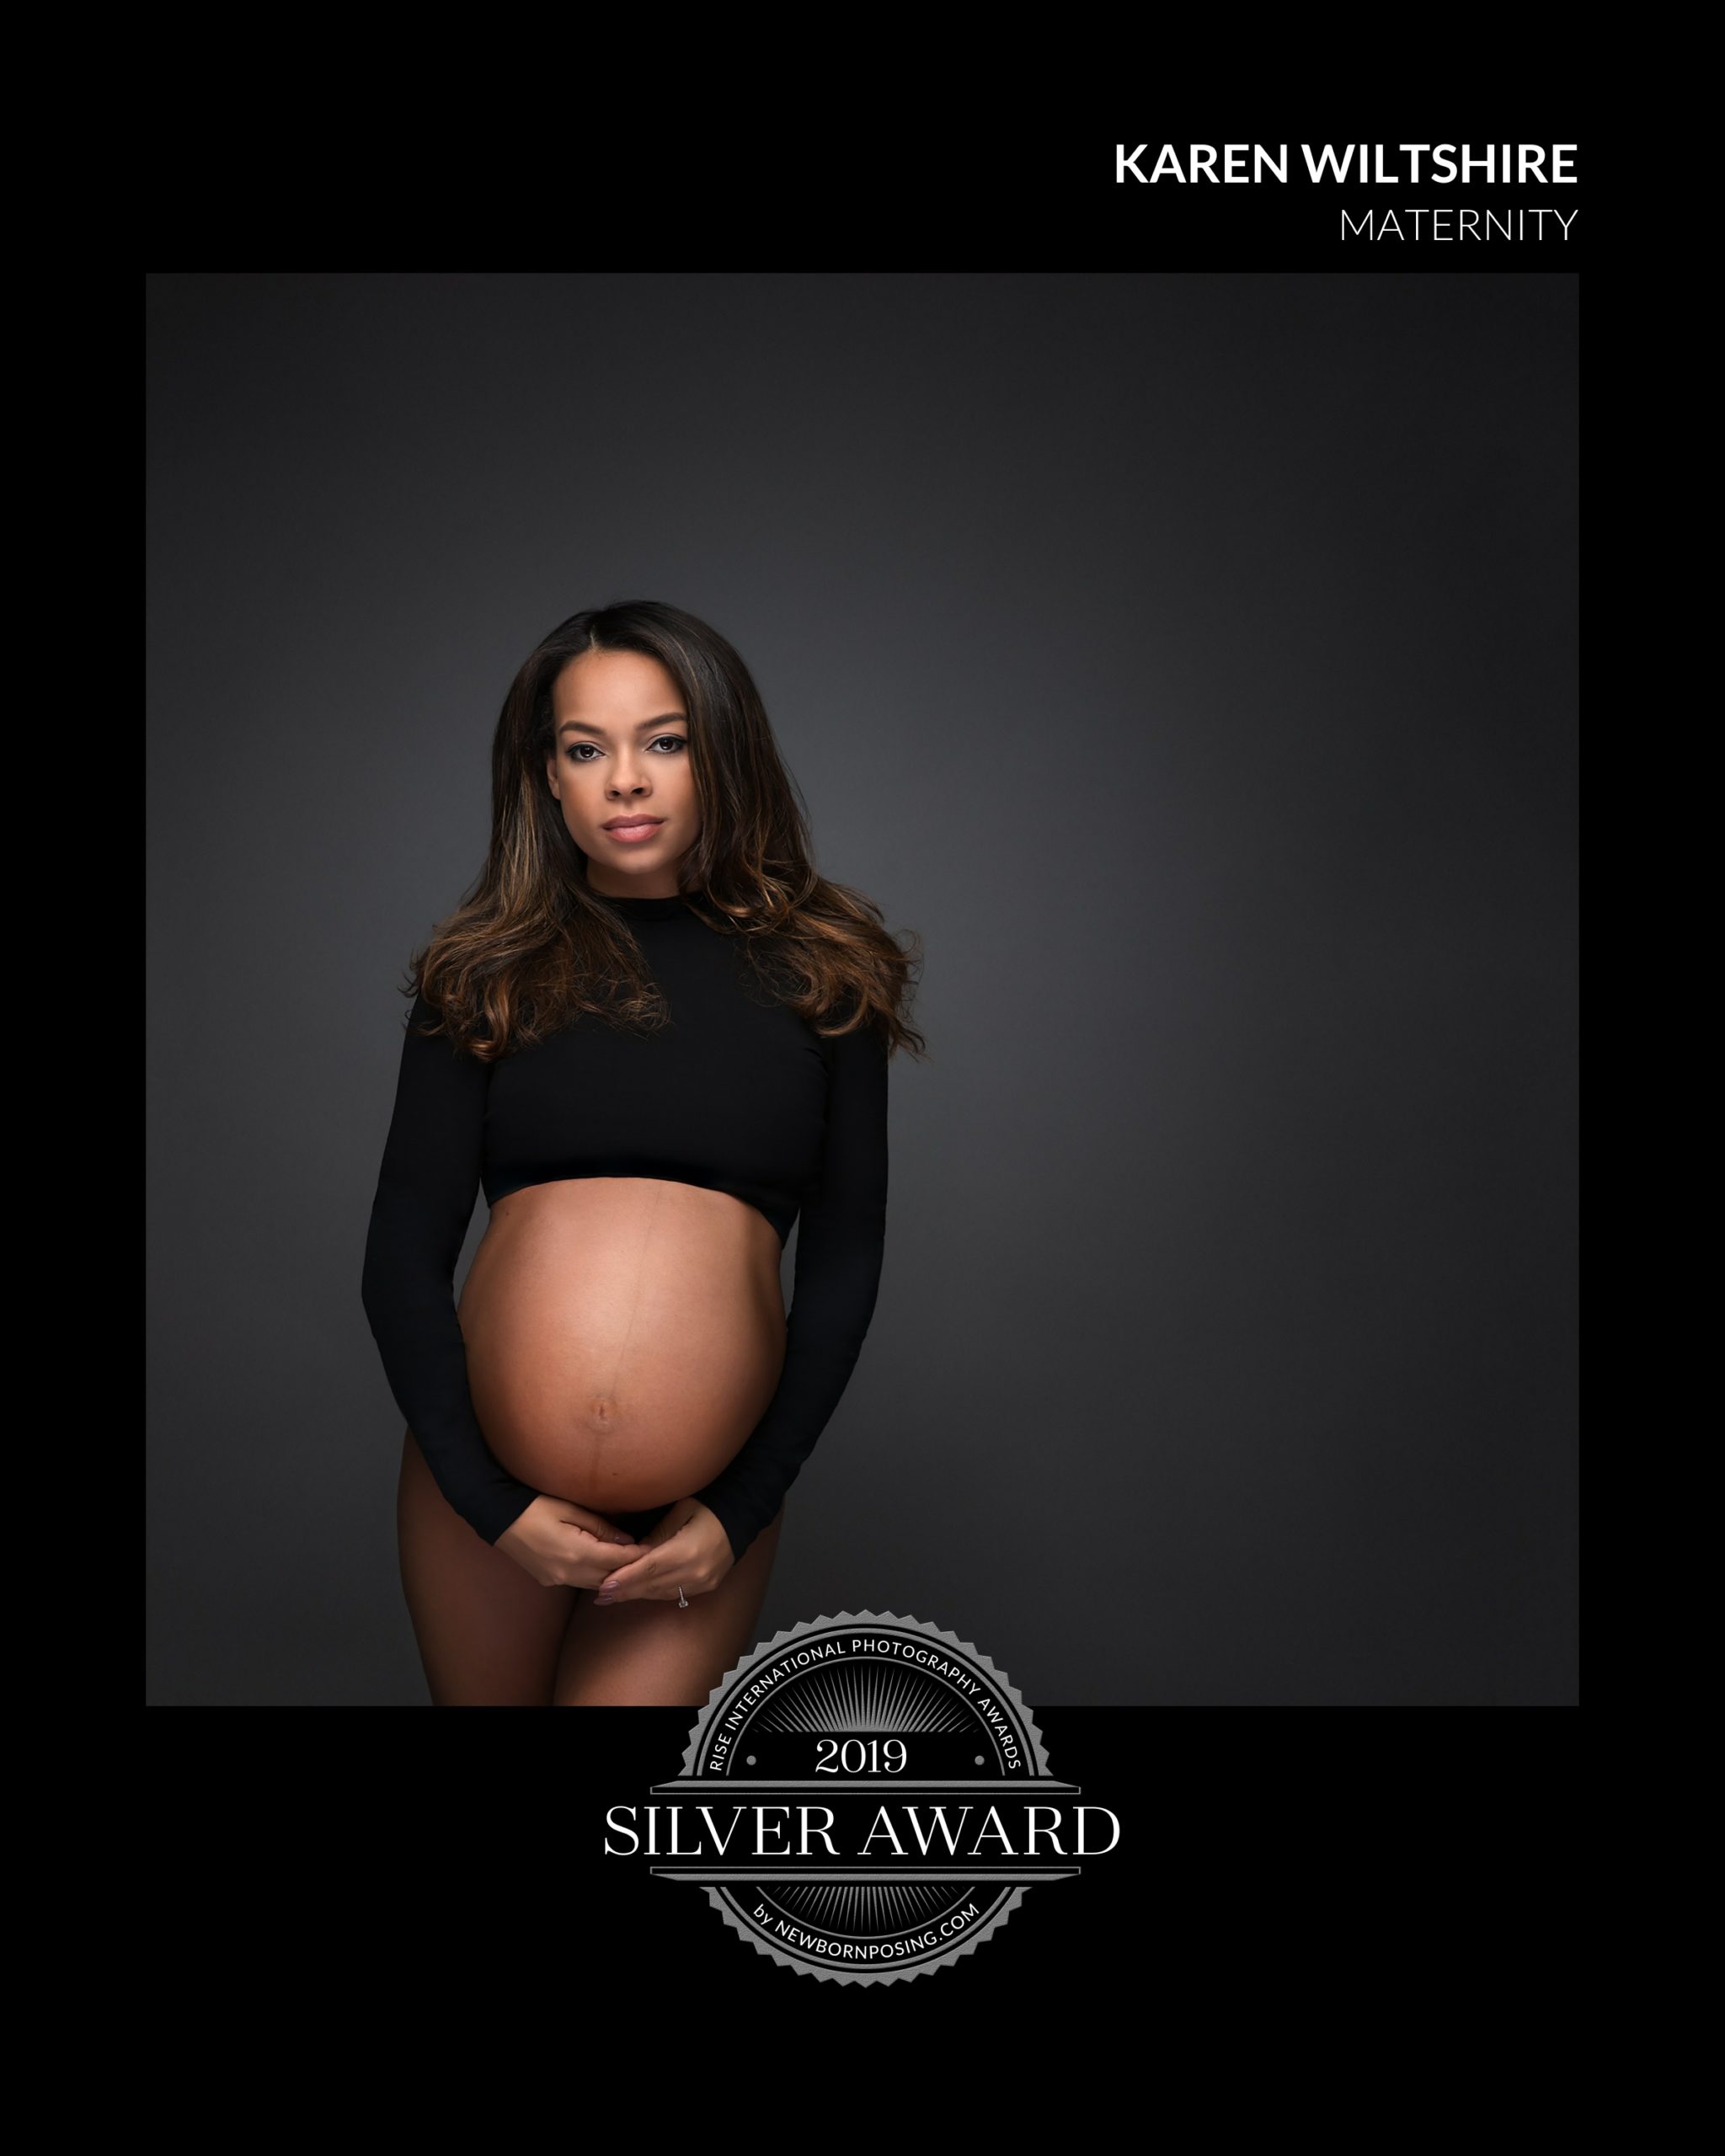 award winning maternity photographer